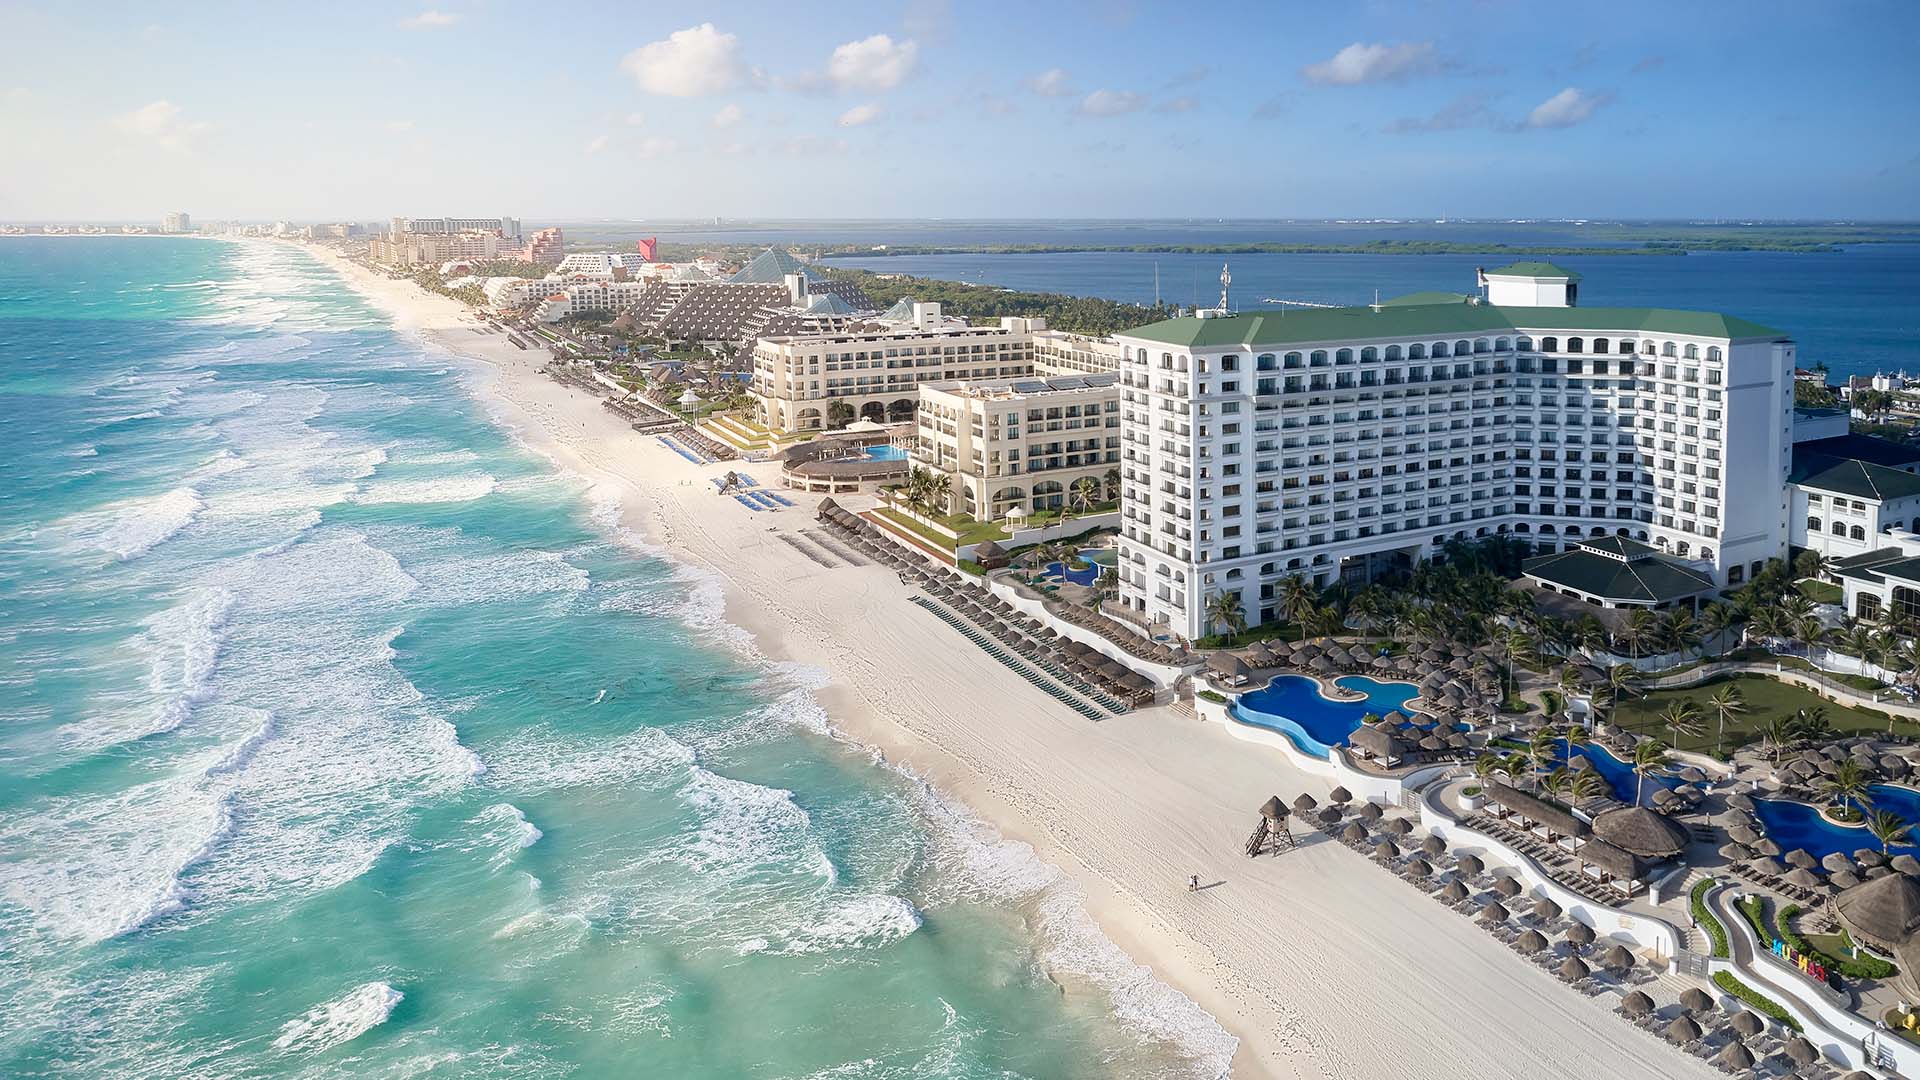 Aerial view of JW Marriott Cancun Resort & Spa